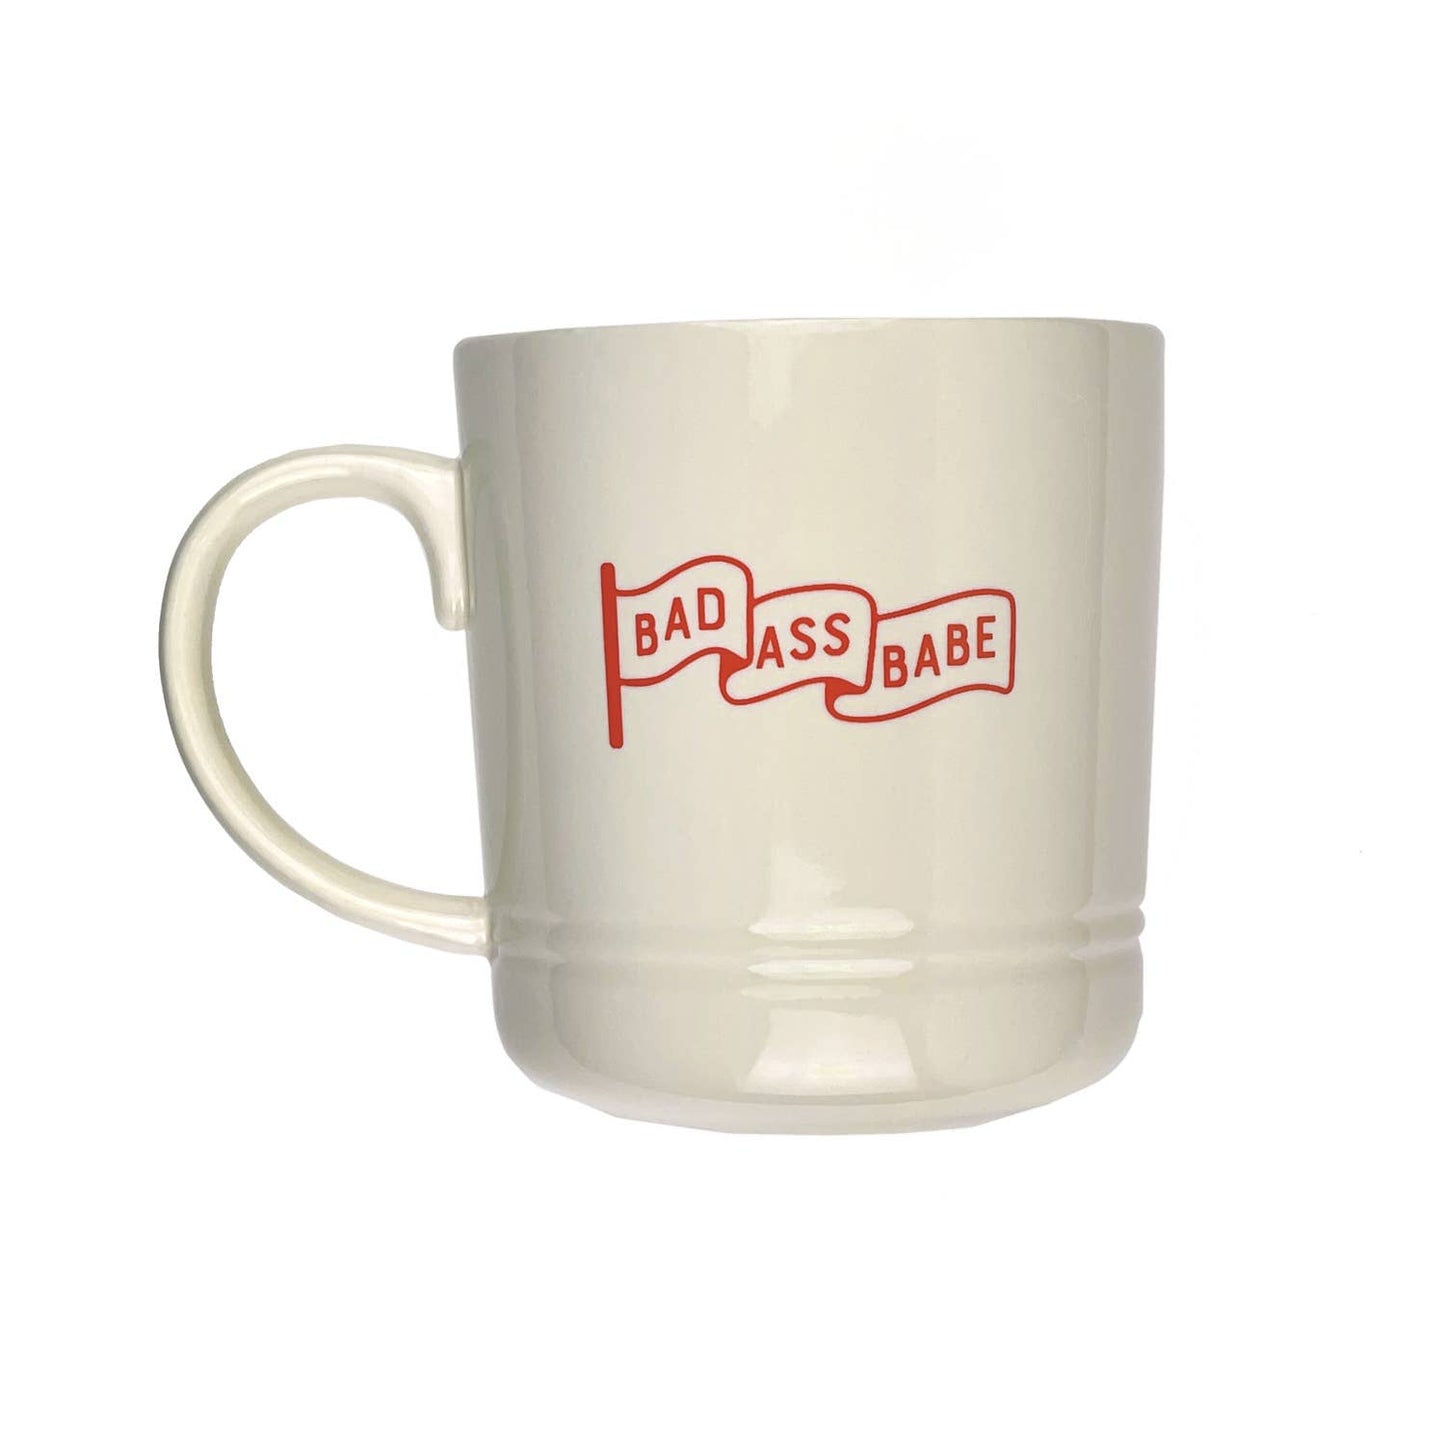 Ruff House Print Shop - Badass Babe Ceramic Coffee Mug